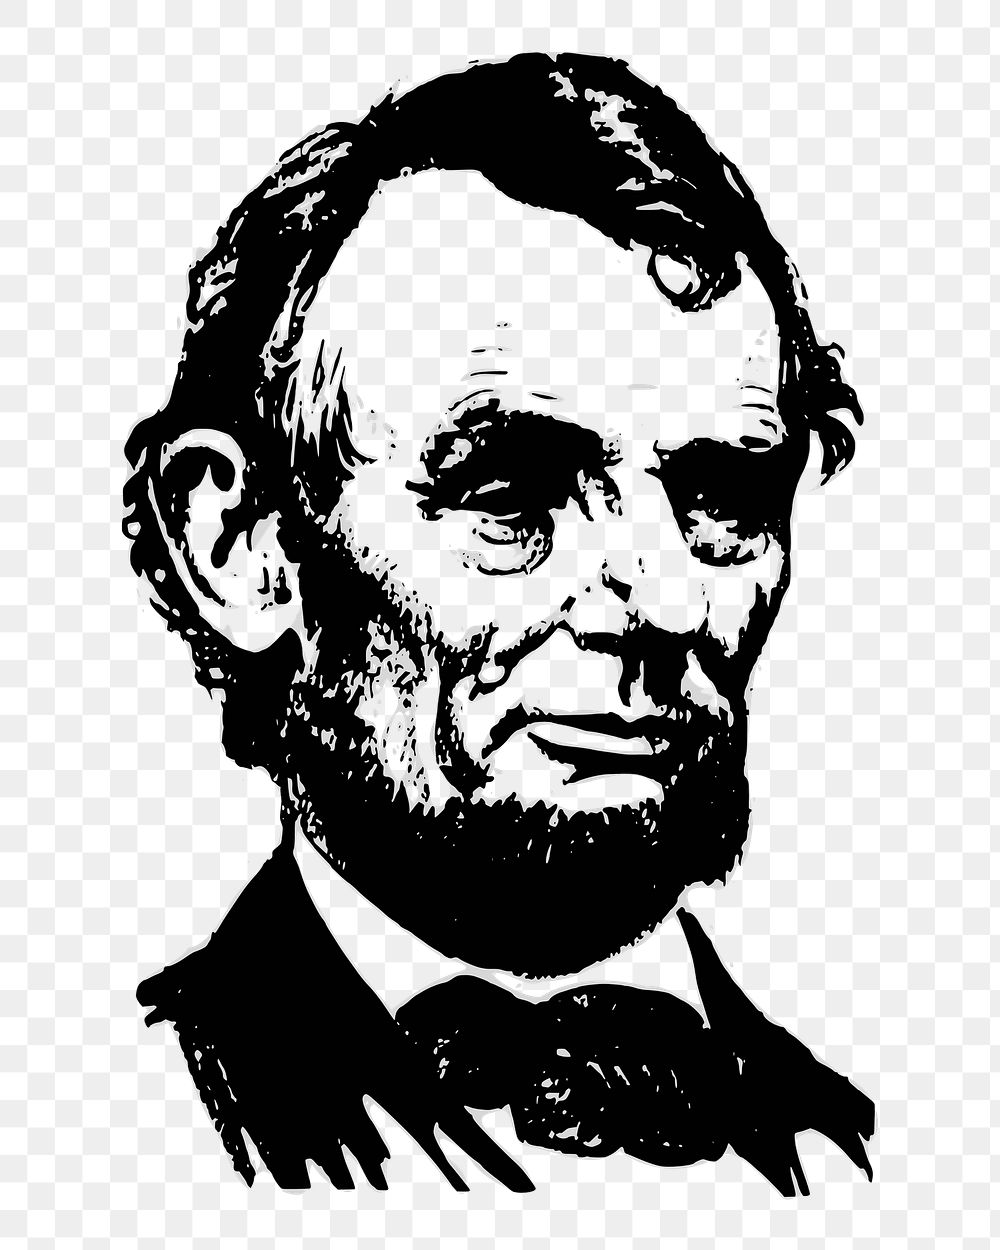 Abraham Lincoln png portrait, US president illustration transparent background. Free public domain CC0 image.